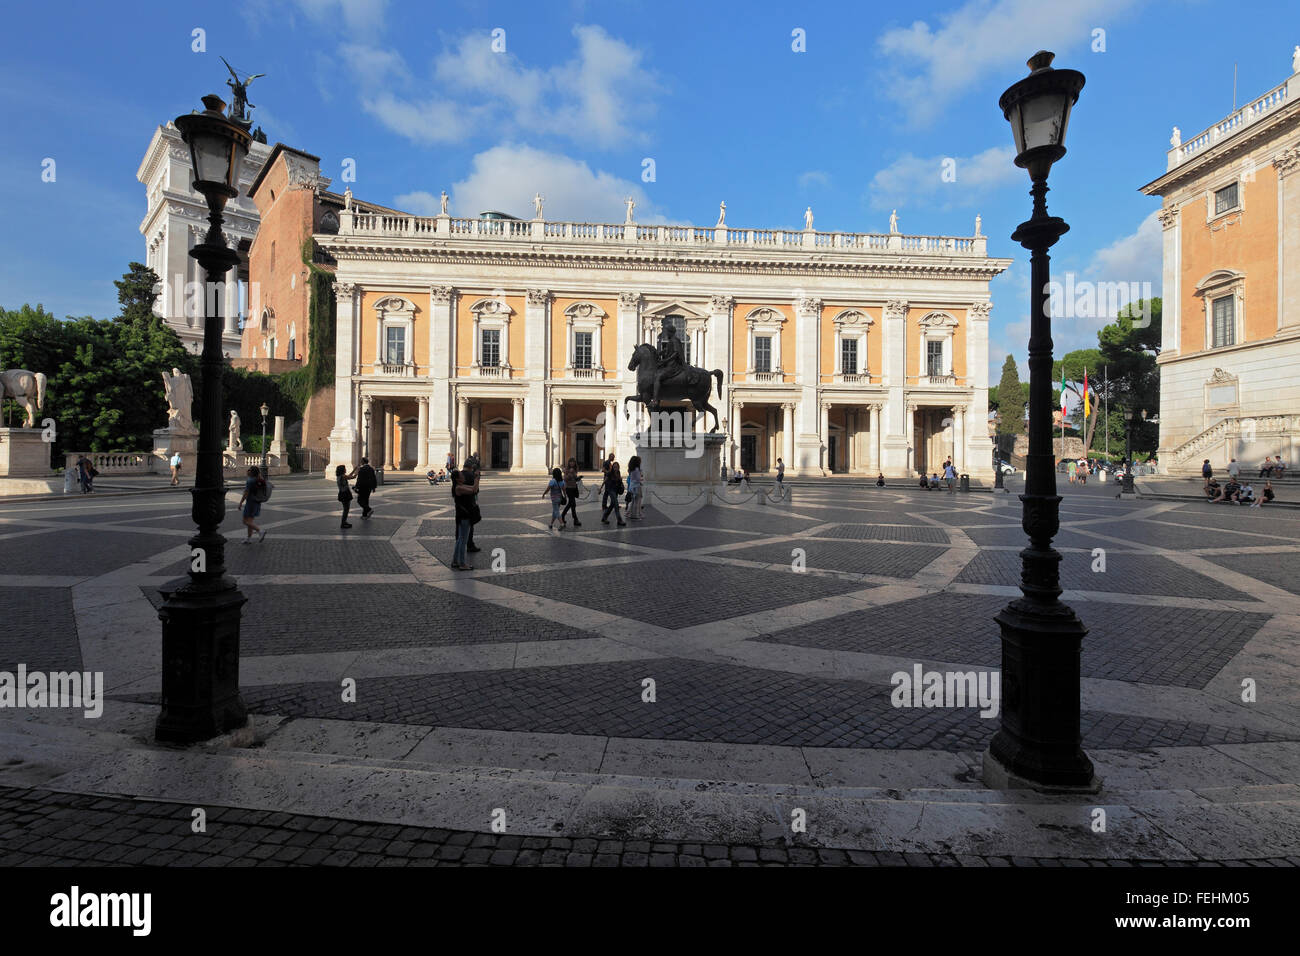 The Palazzo Nuovo of the Capitoline Museums (Musei Capitolini) in Piazza del Campidoglio, on the Capitoline Hill in Rome, Italy Stock Photo